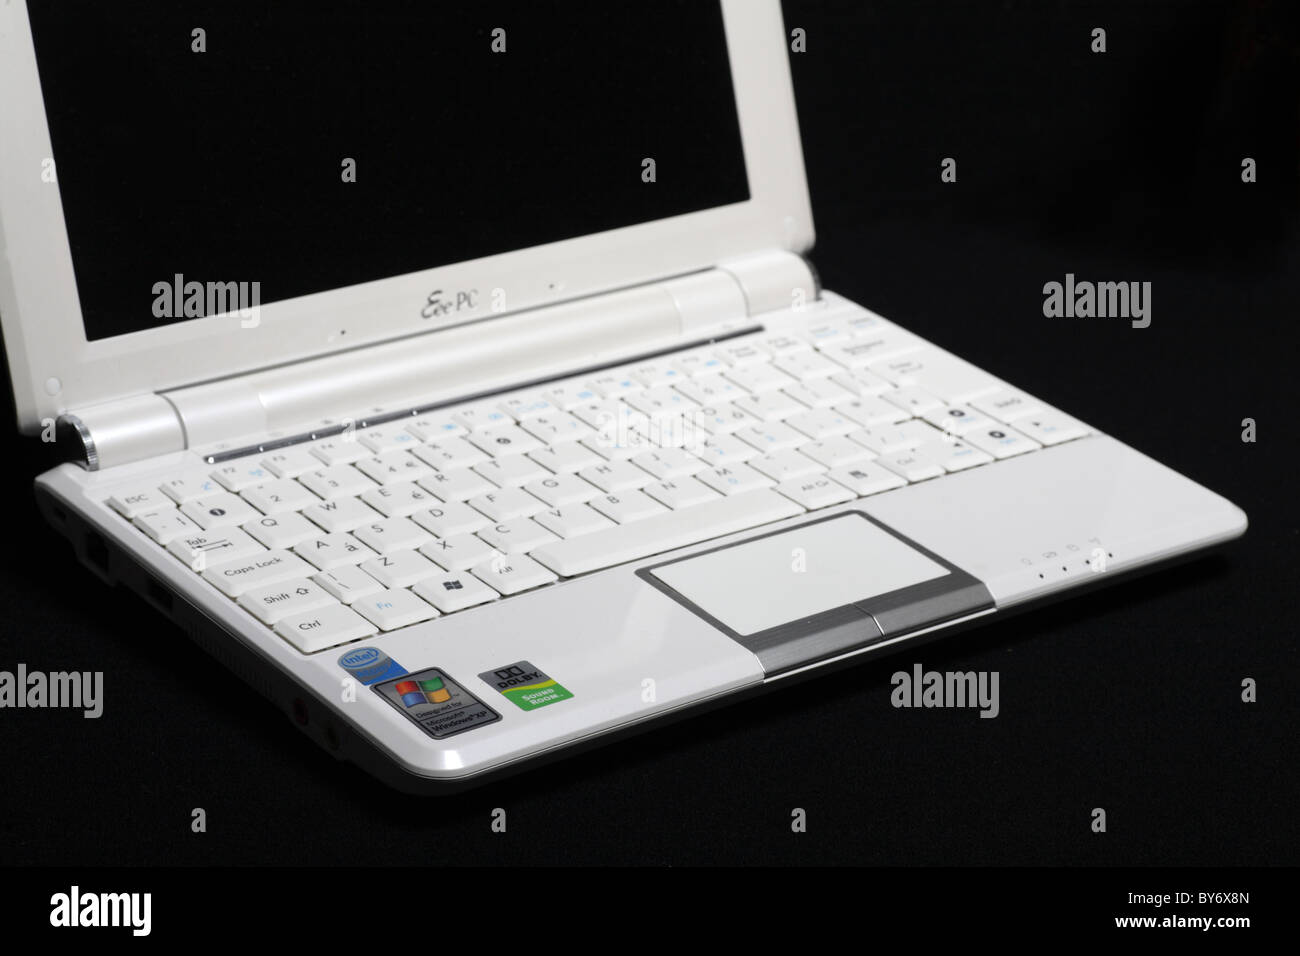 White Asus Eeepc 10 inch screen windows netbook mini laptop computer PC isolated on black Stock Photo